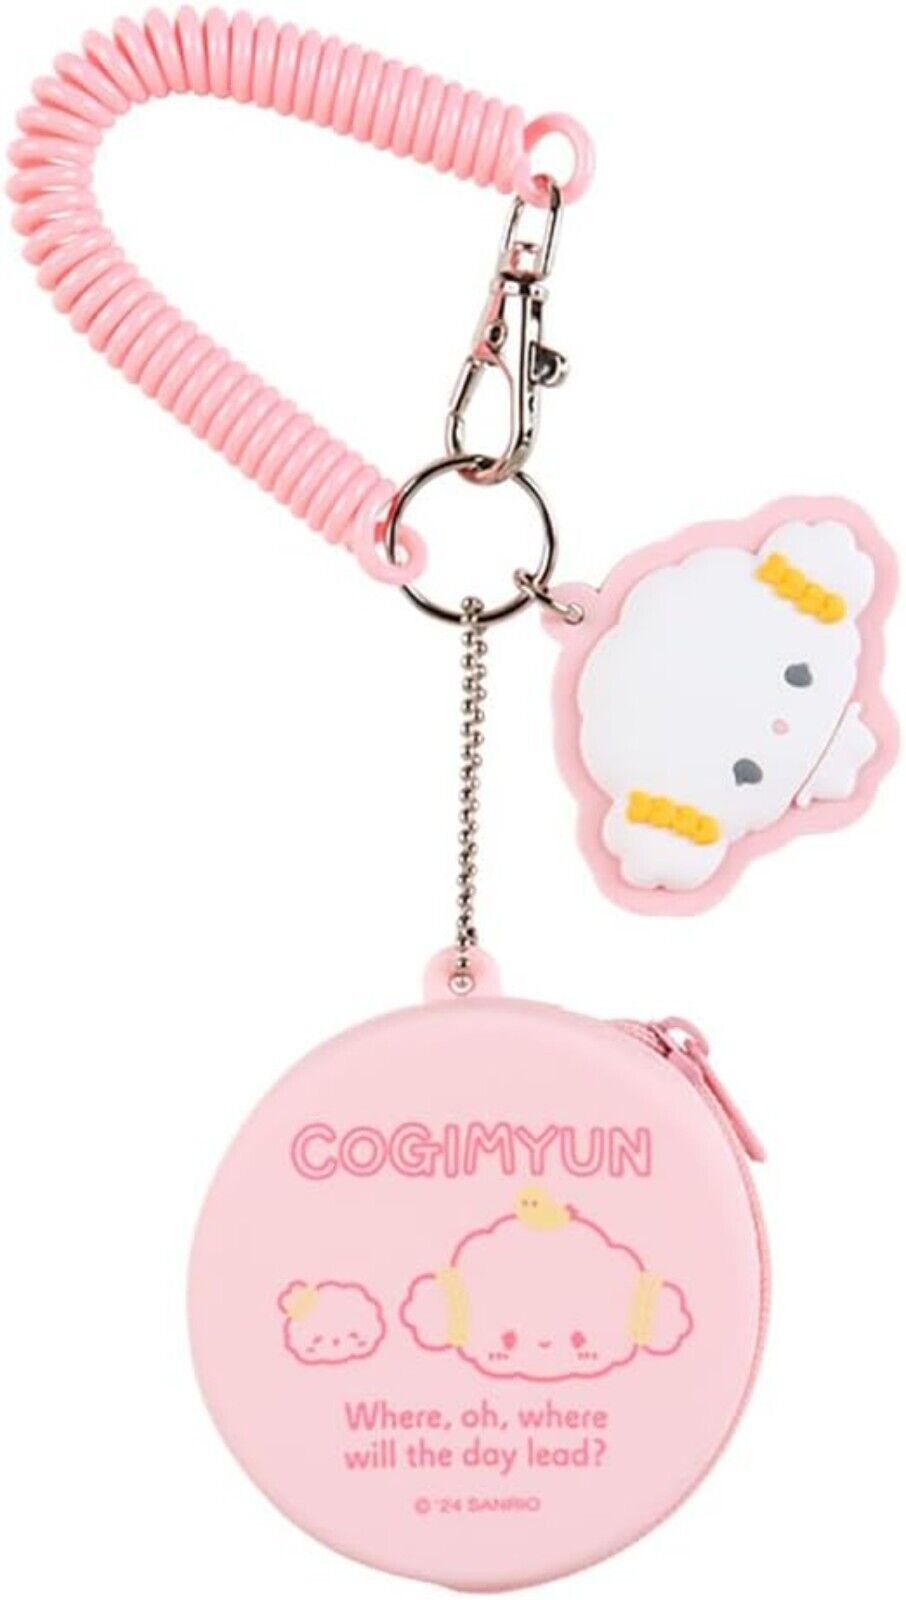 Sanrio Character Cogimyun Silicone Mini Case Charm Bag Charm Coin Case New Japan